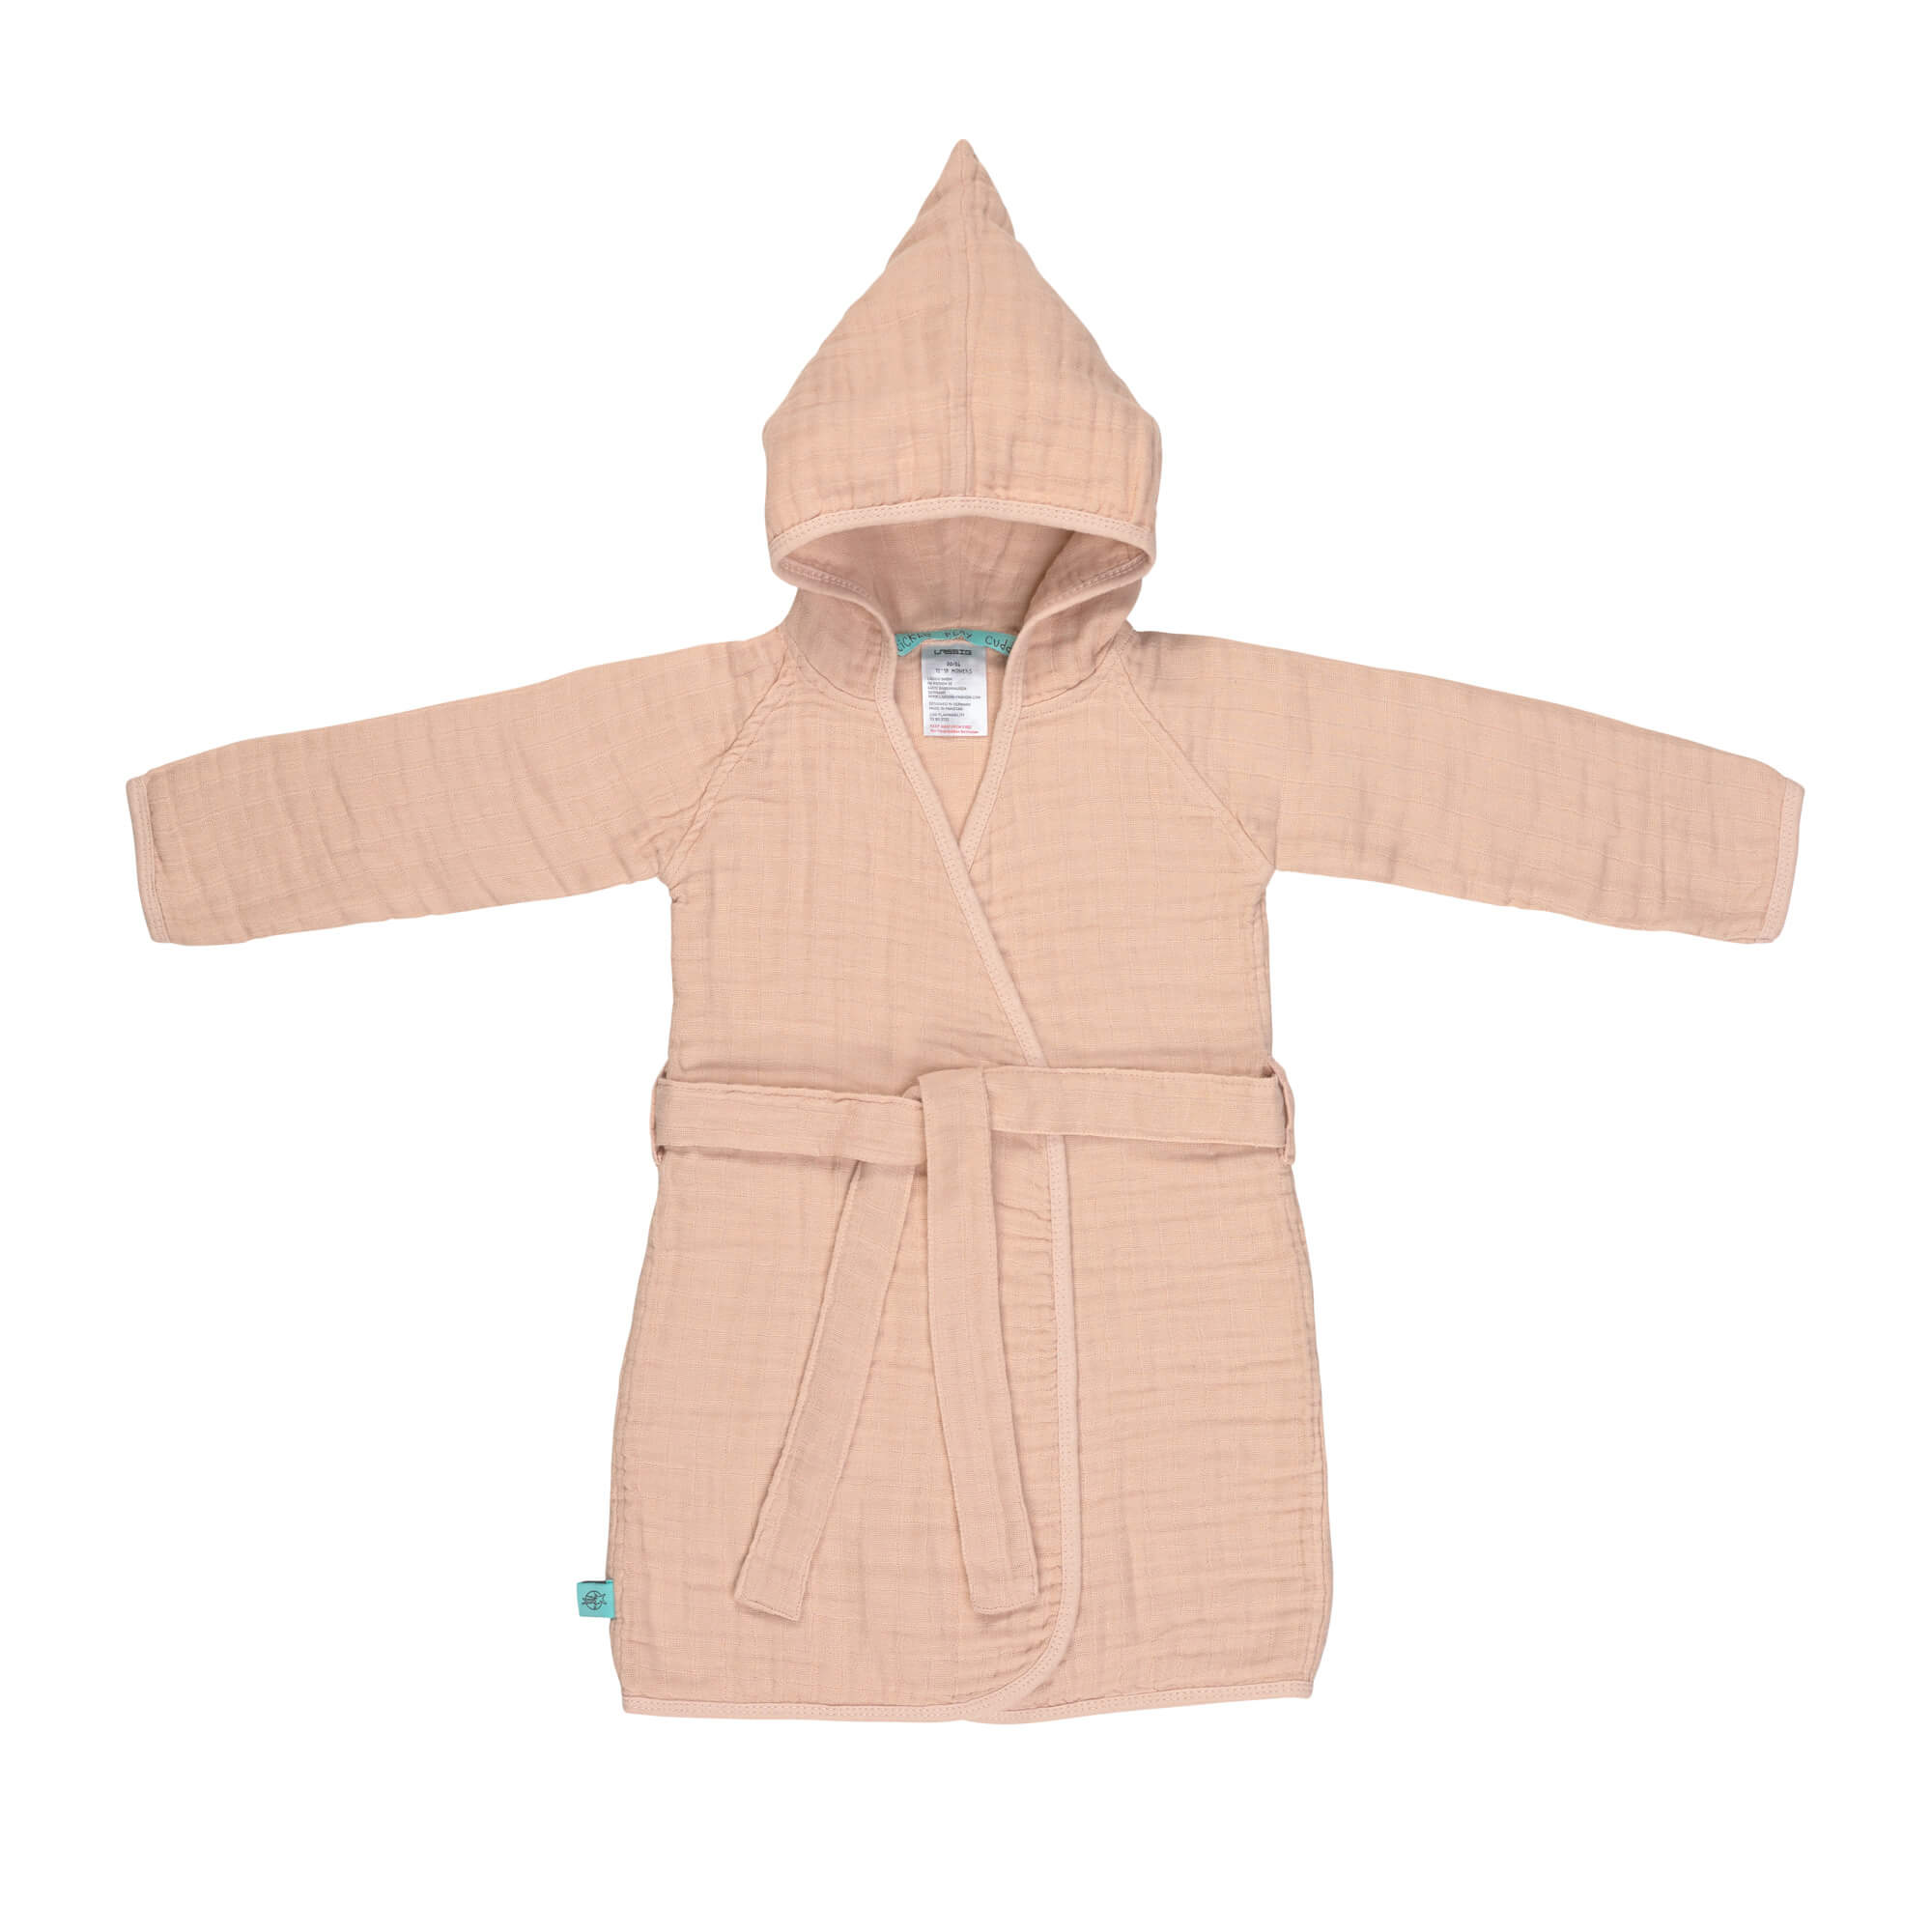 Badekleidung Bademantel rosa 24-36 Monate Lässig